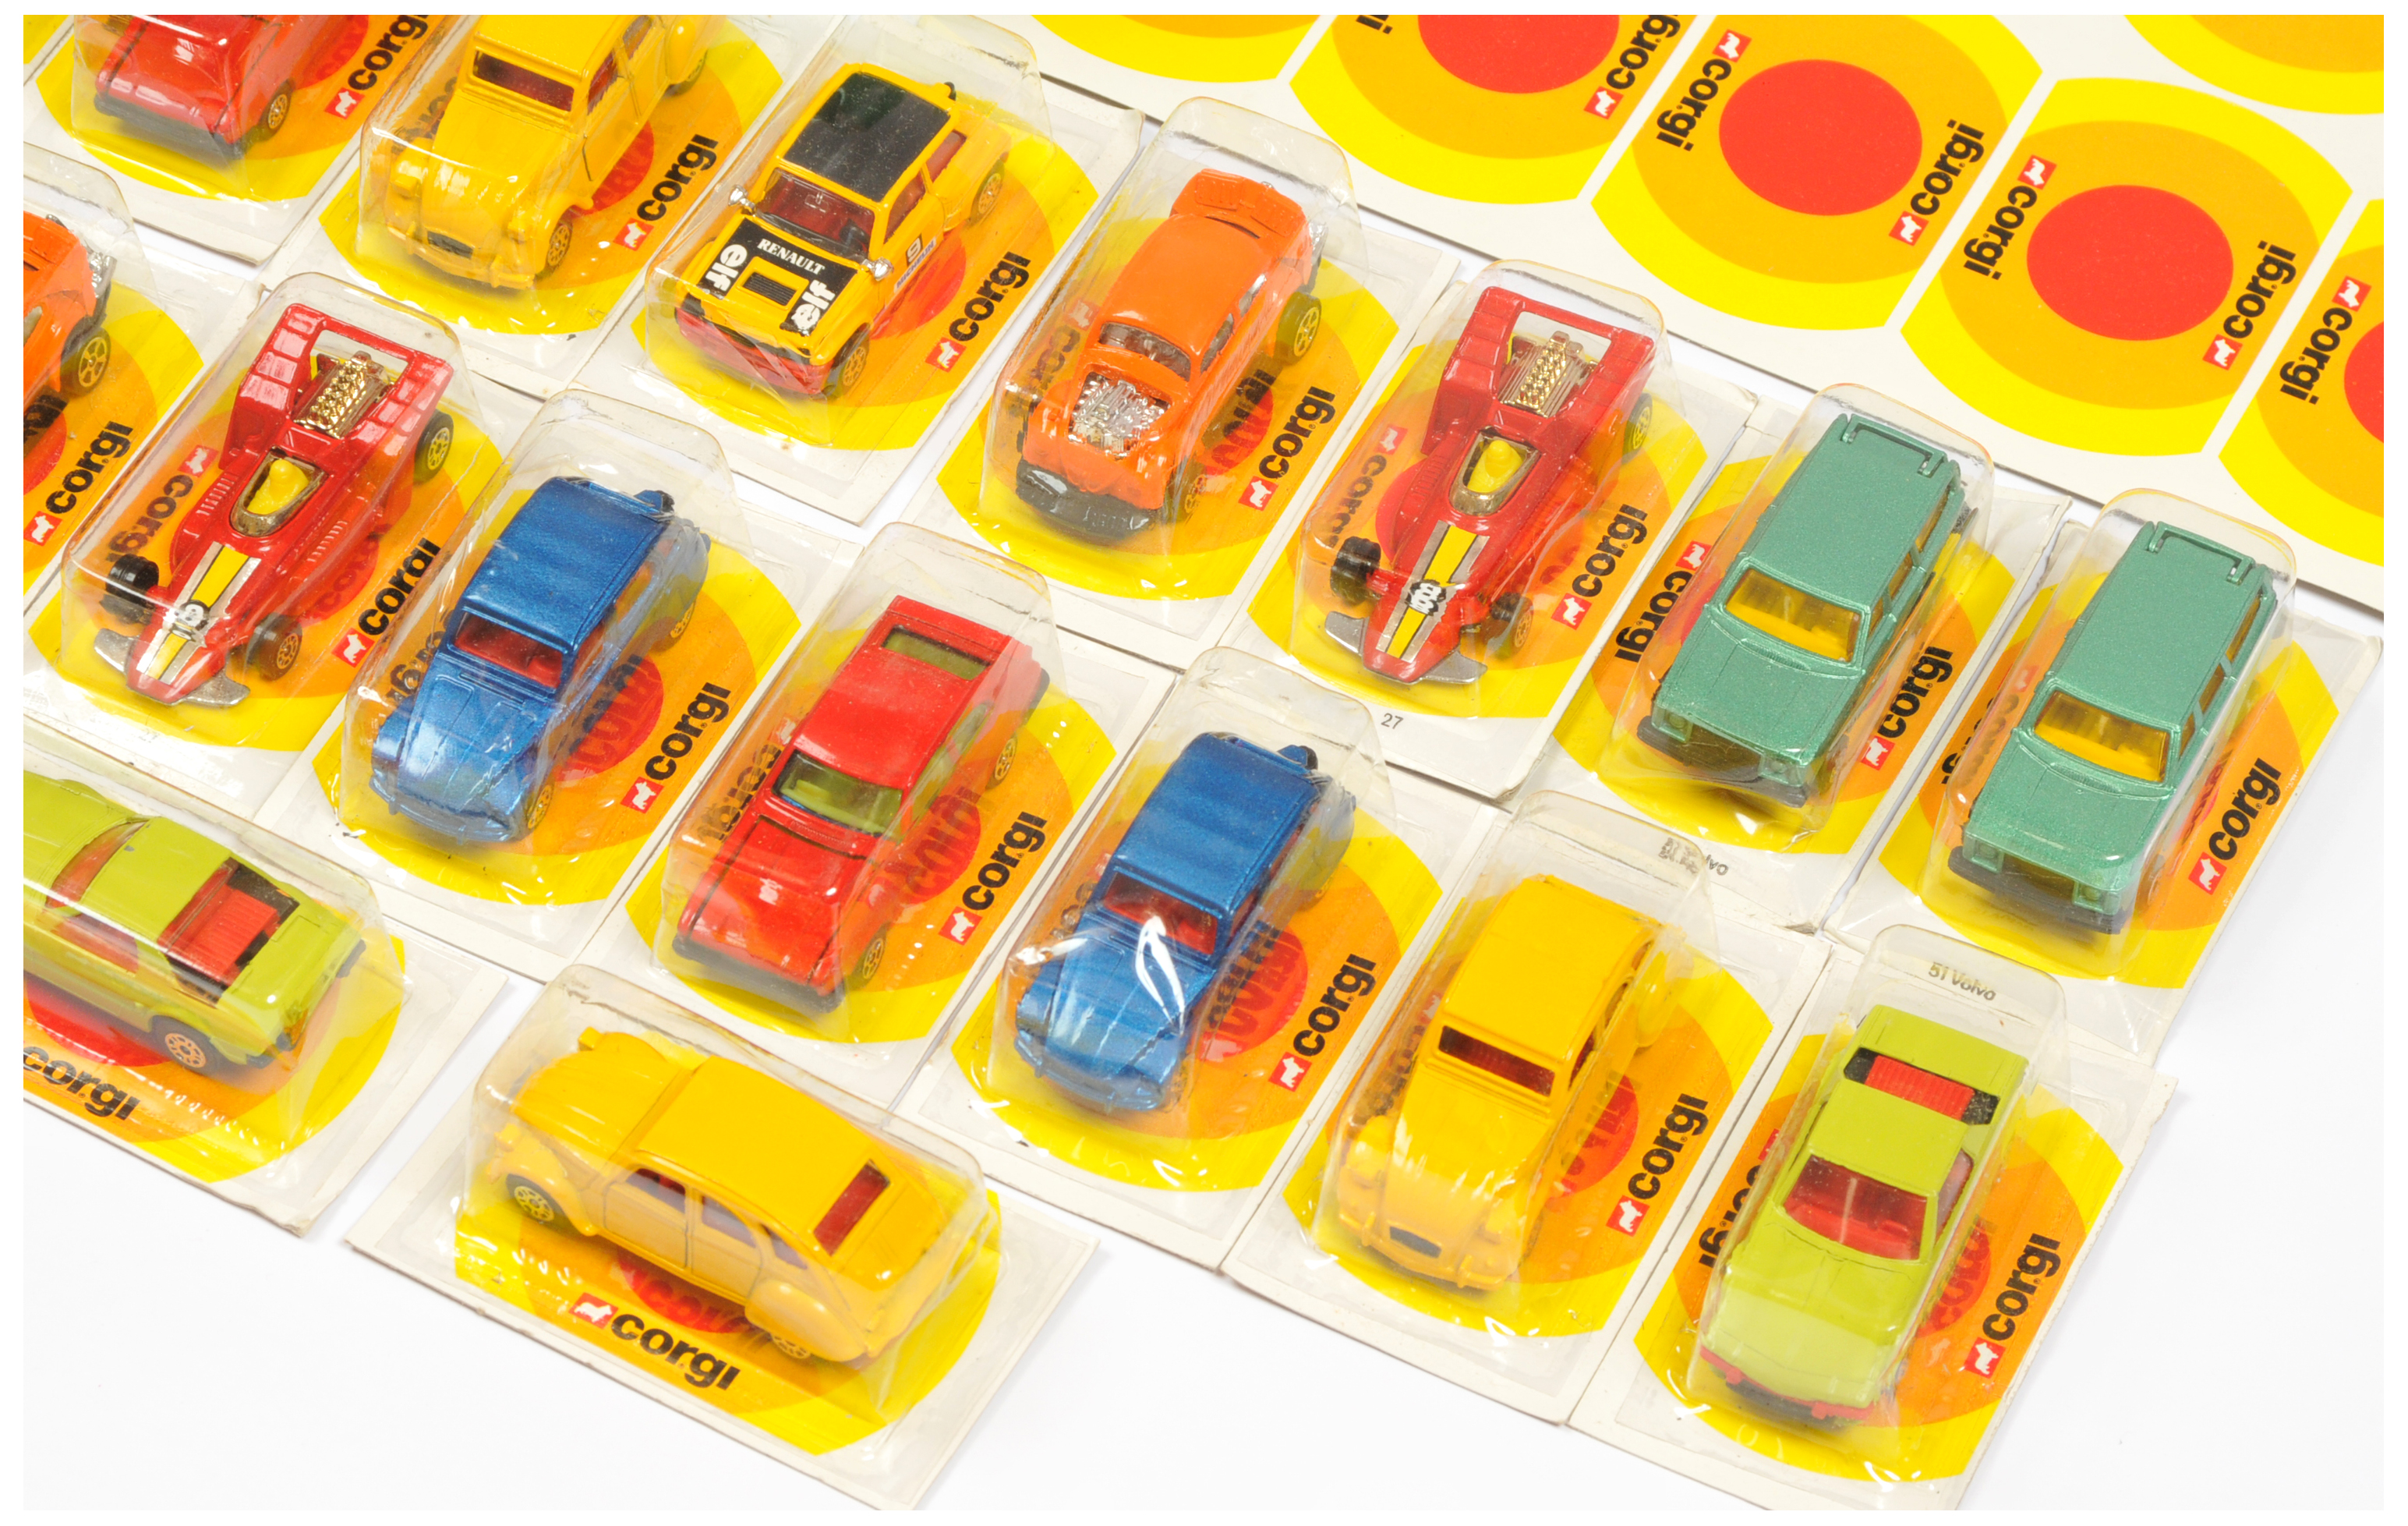 Corgi Toys Juniors E4536 Shop Counter Trade Box Containing 24 Pieces To Include - Fiat X1/19, - L... - Image 2 of 4